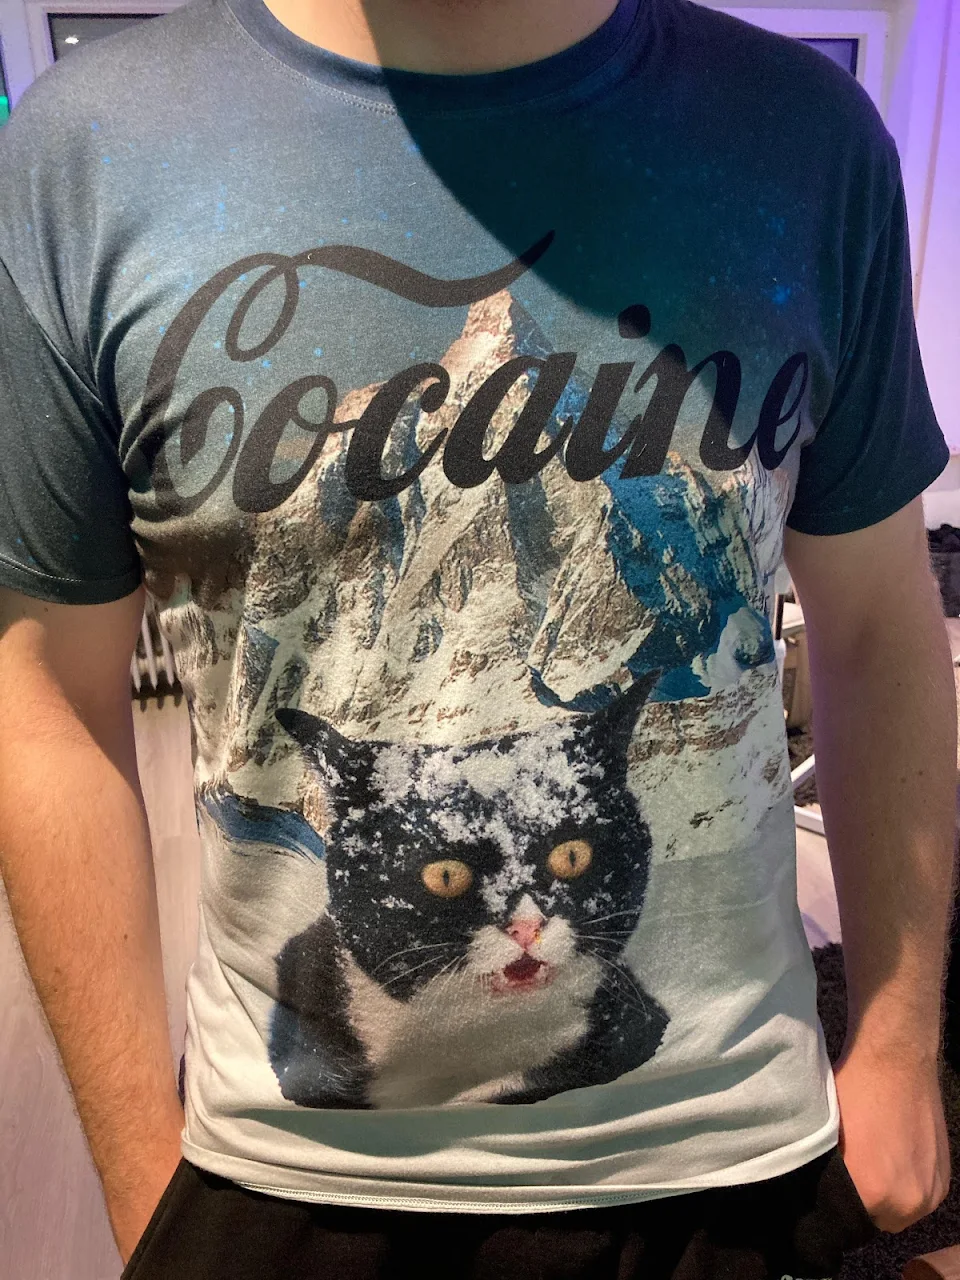 My friend bought himself a shirt